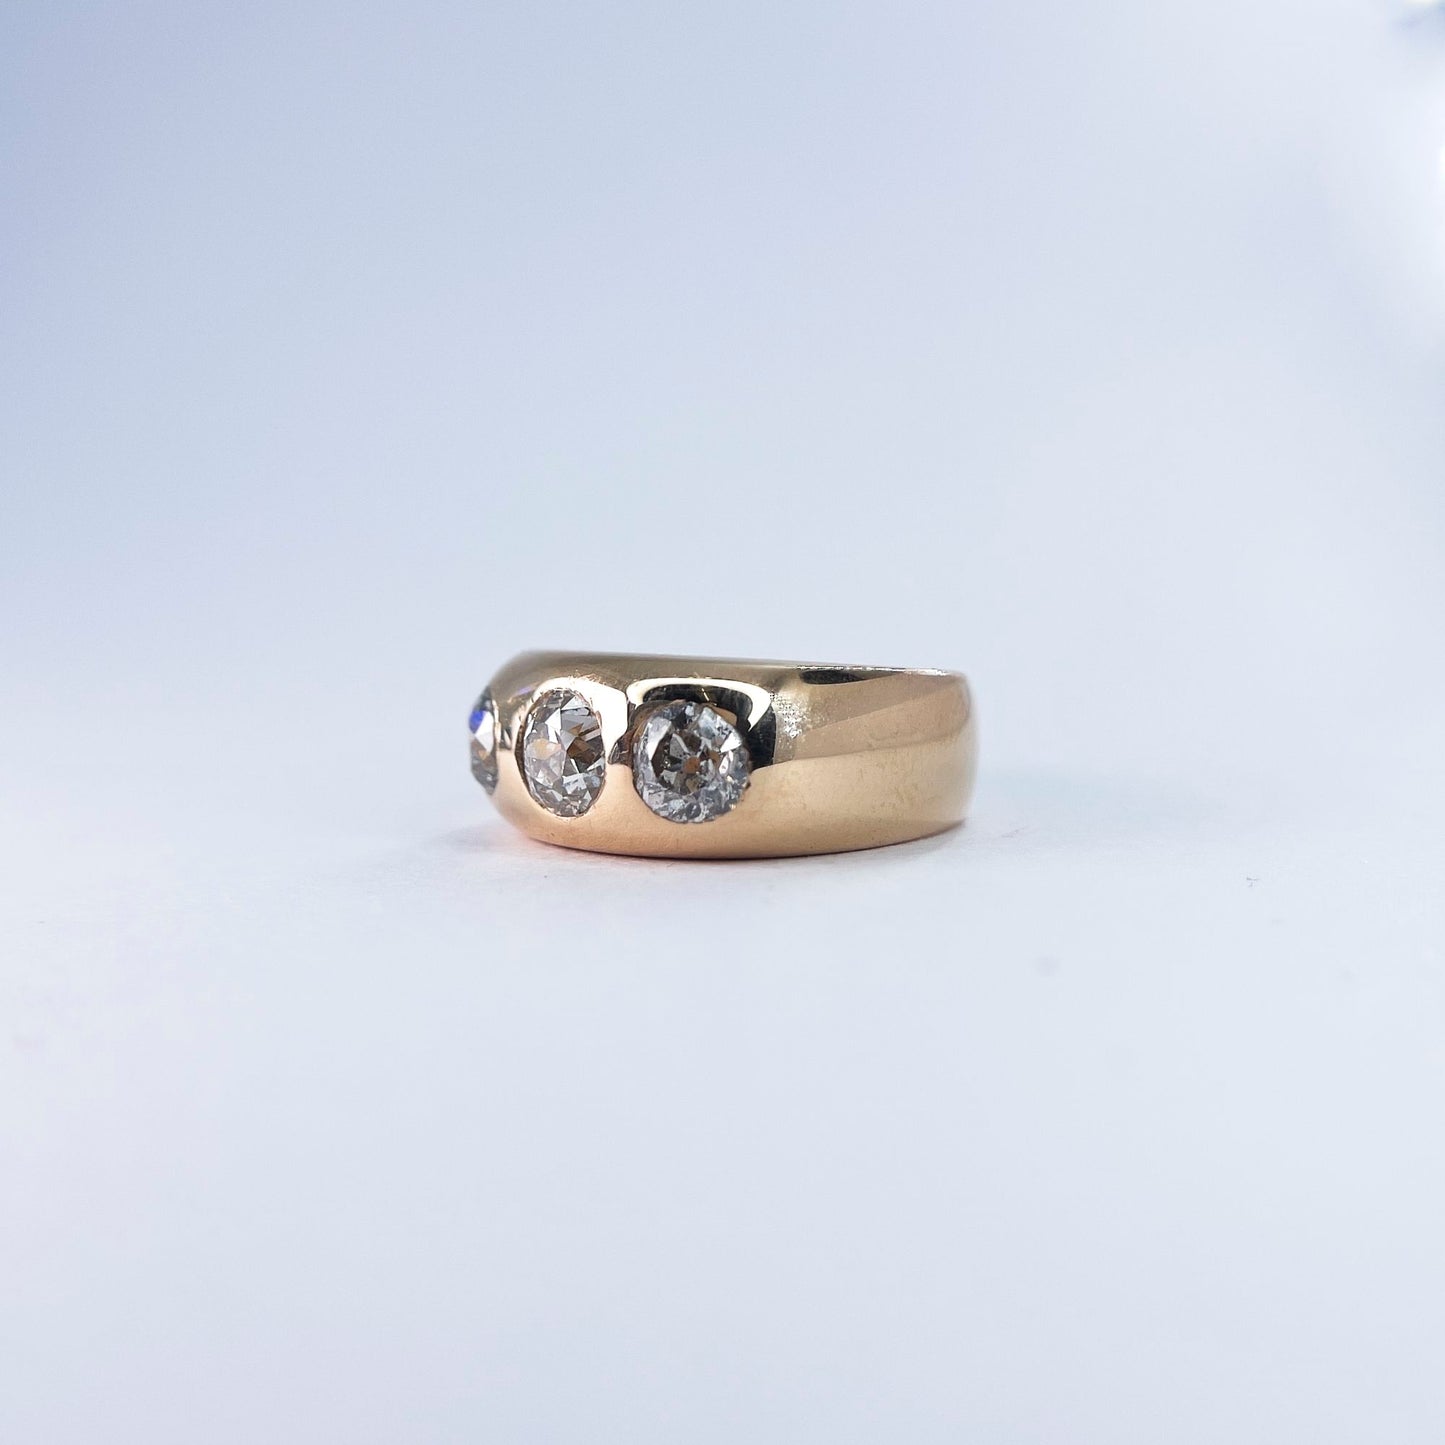 18K Rose Gold Gypsy Cut Inlay Diamond Ring